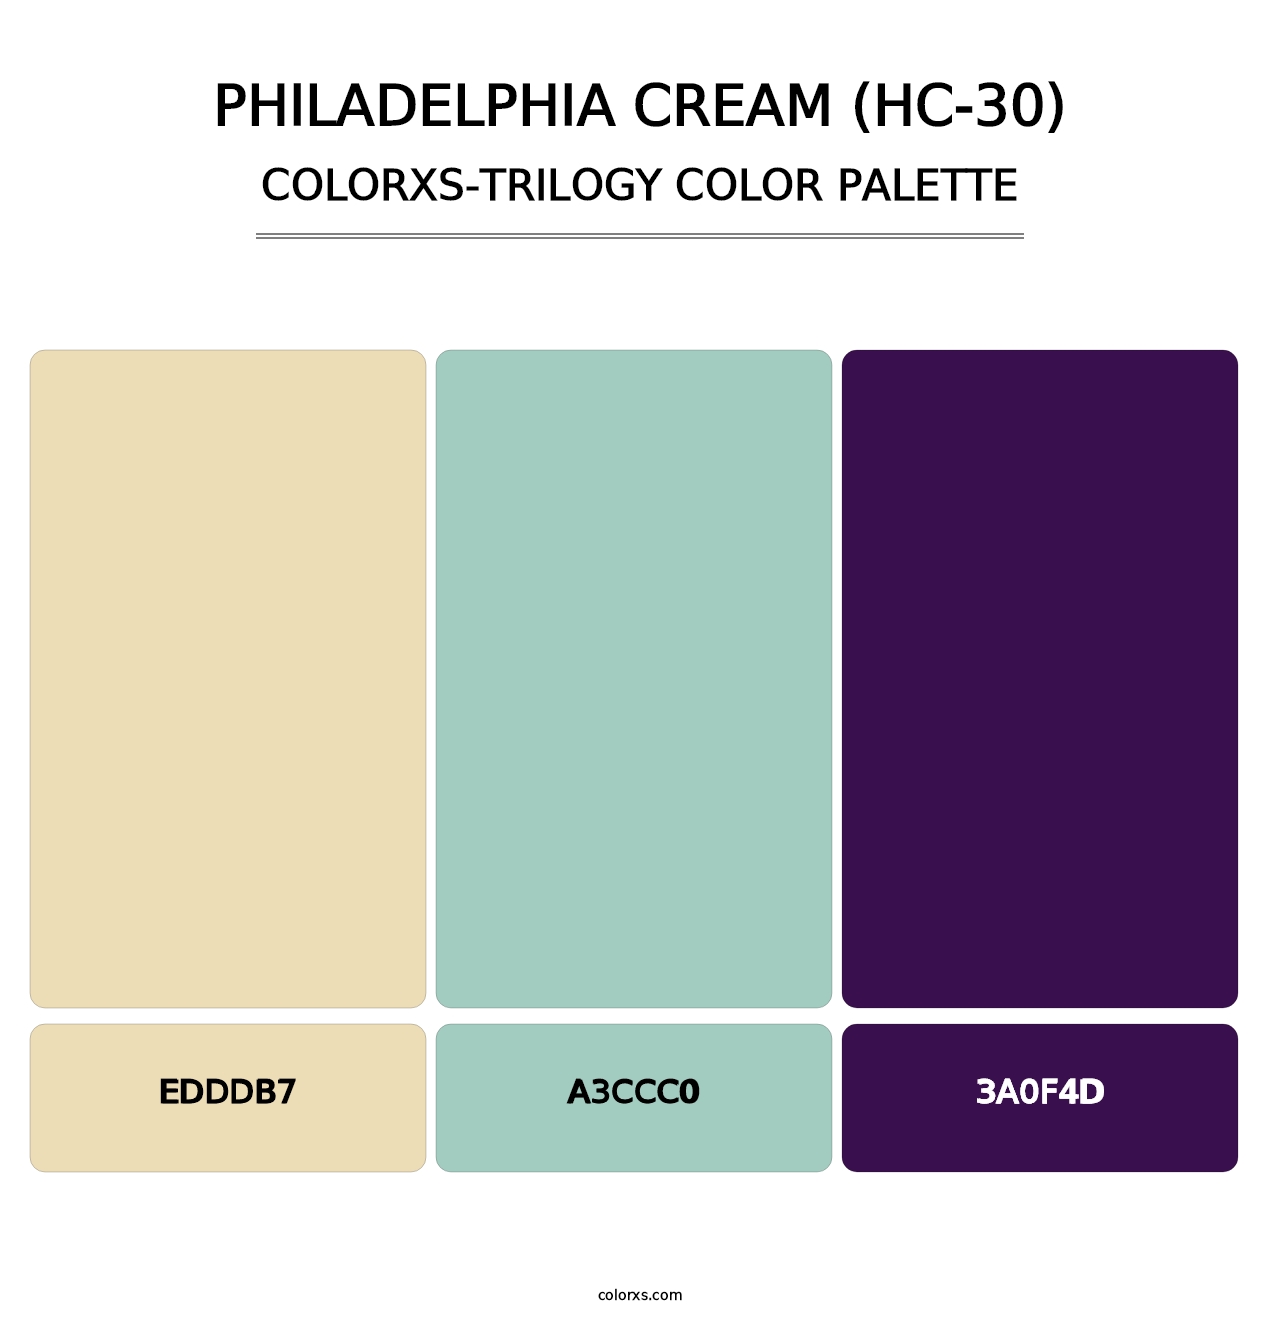 Philadelphia Cream (HC-30) - Colorxs Trilogy Palette